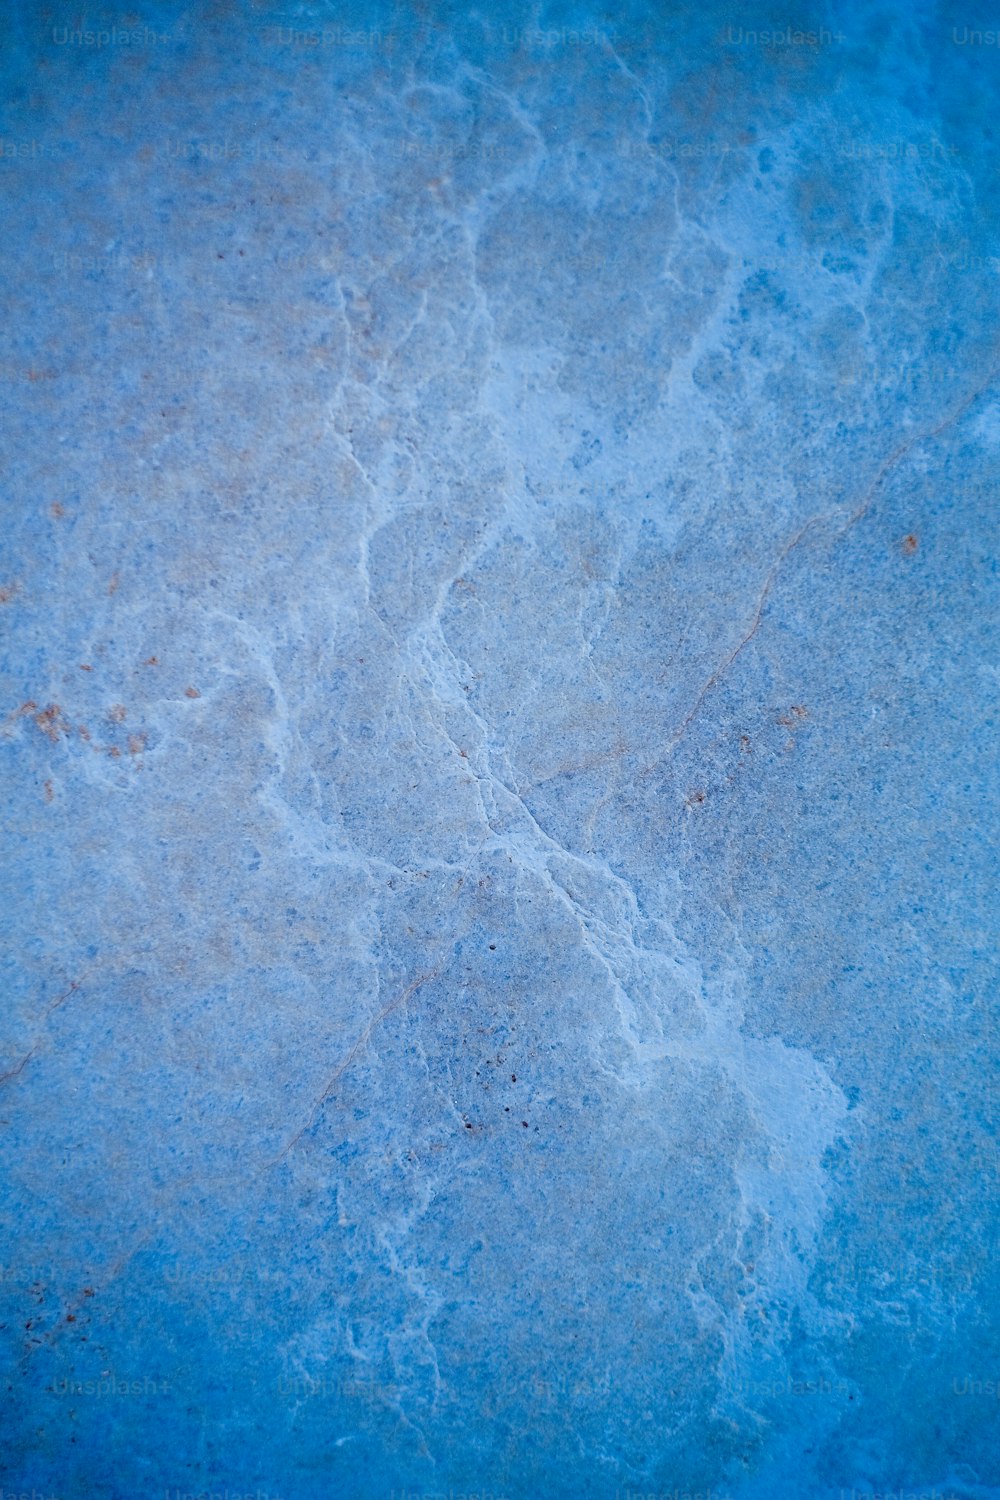 un primer plano de una superficie azul con agua